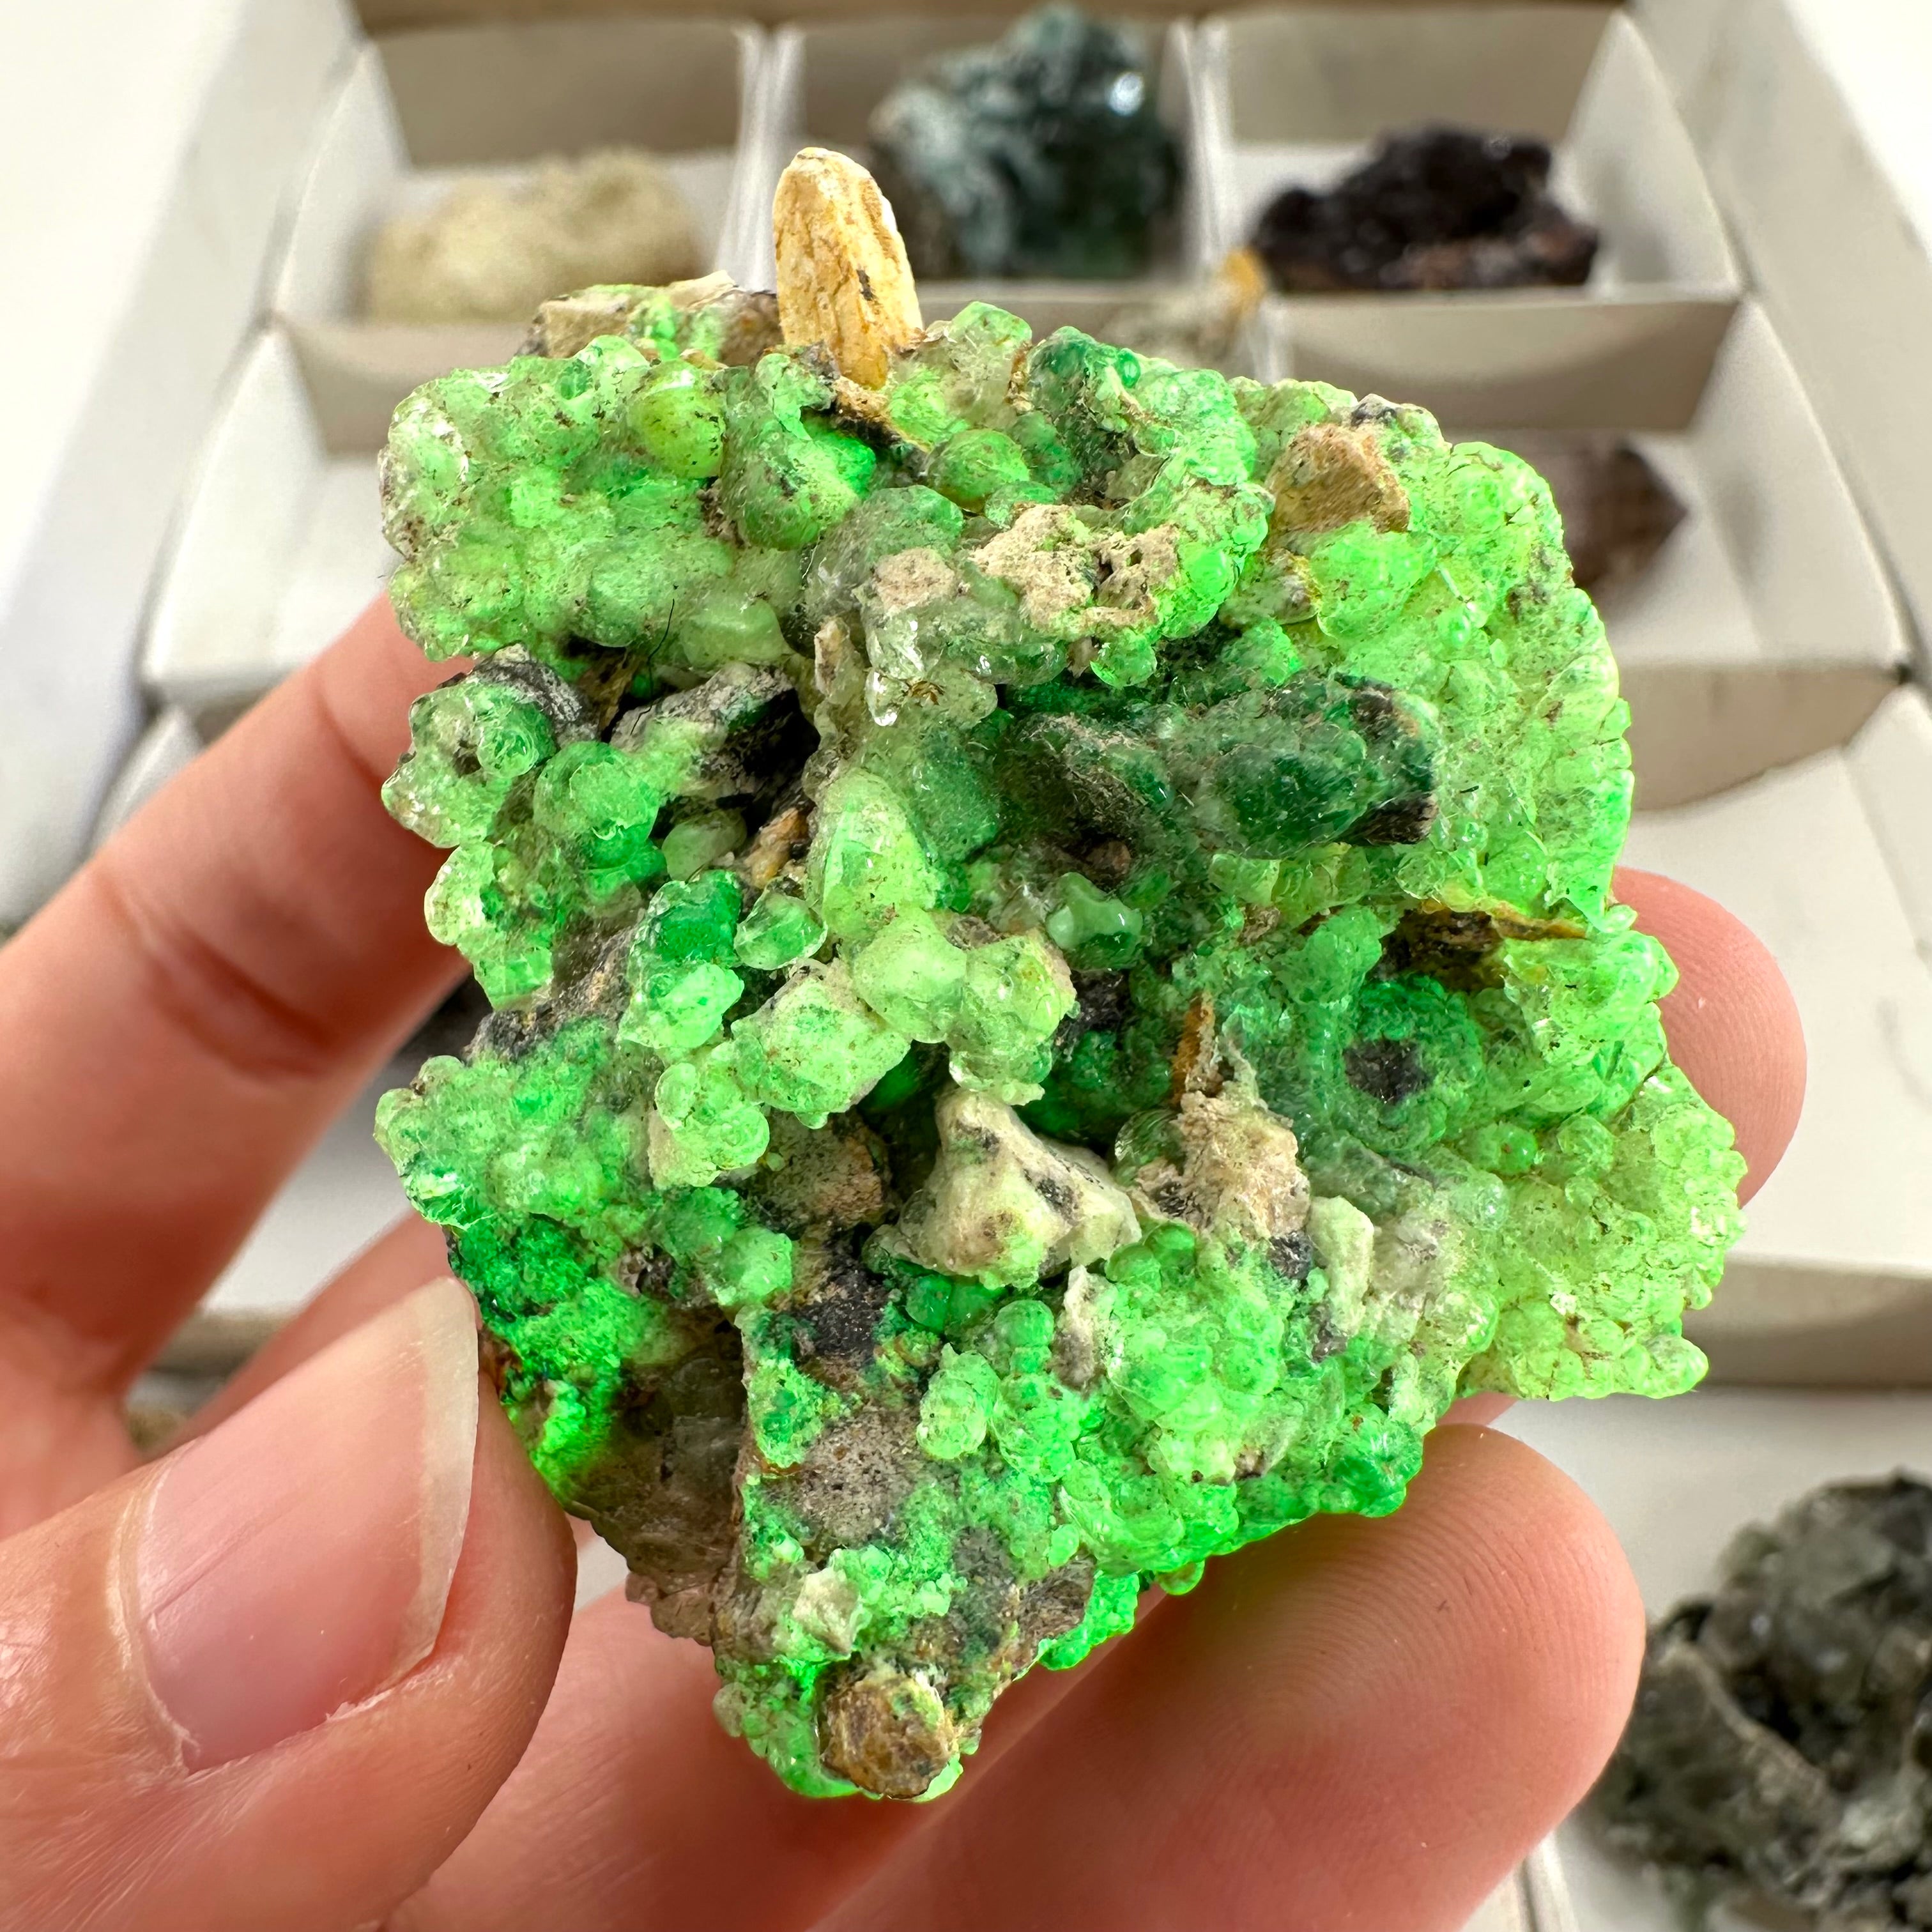 14 Piece/ 480g Flat of Mixed Minerals from Namibia | Okorusu Fluorite, Aquamarine, Hyalite Opal, Amethyst, Smoky Quartz